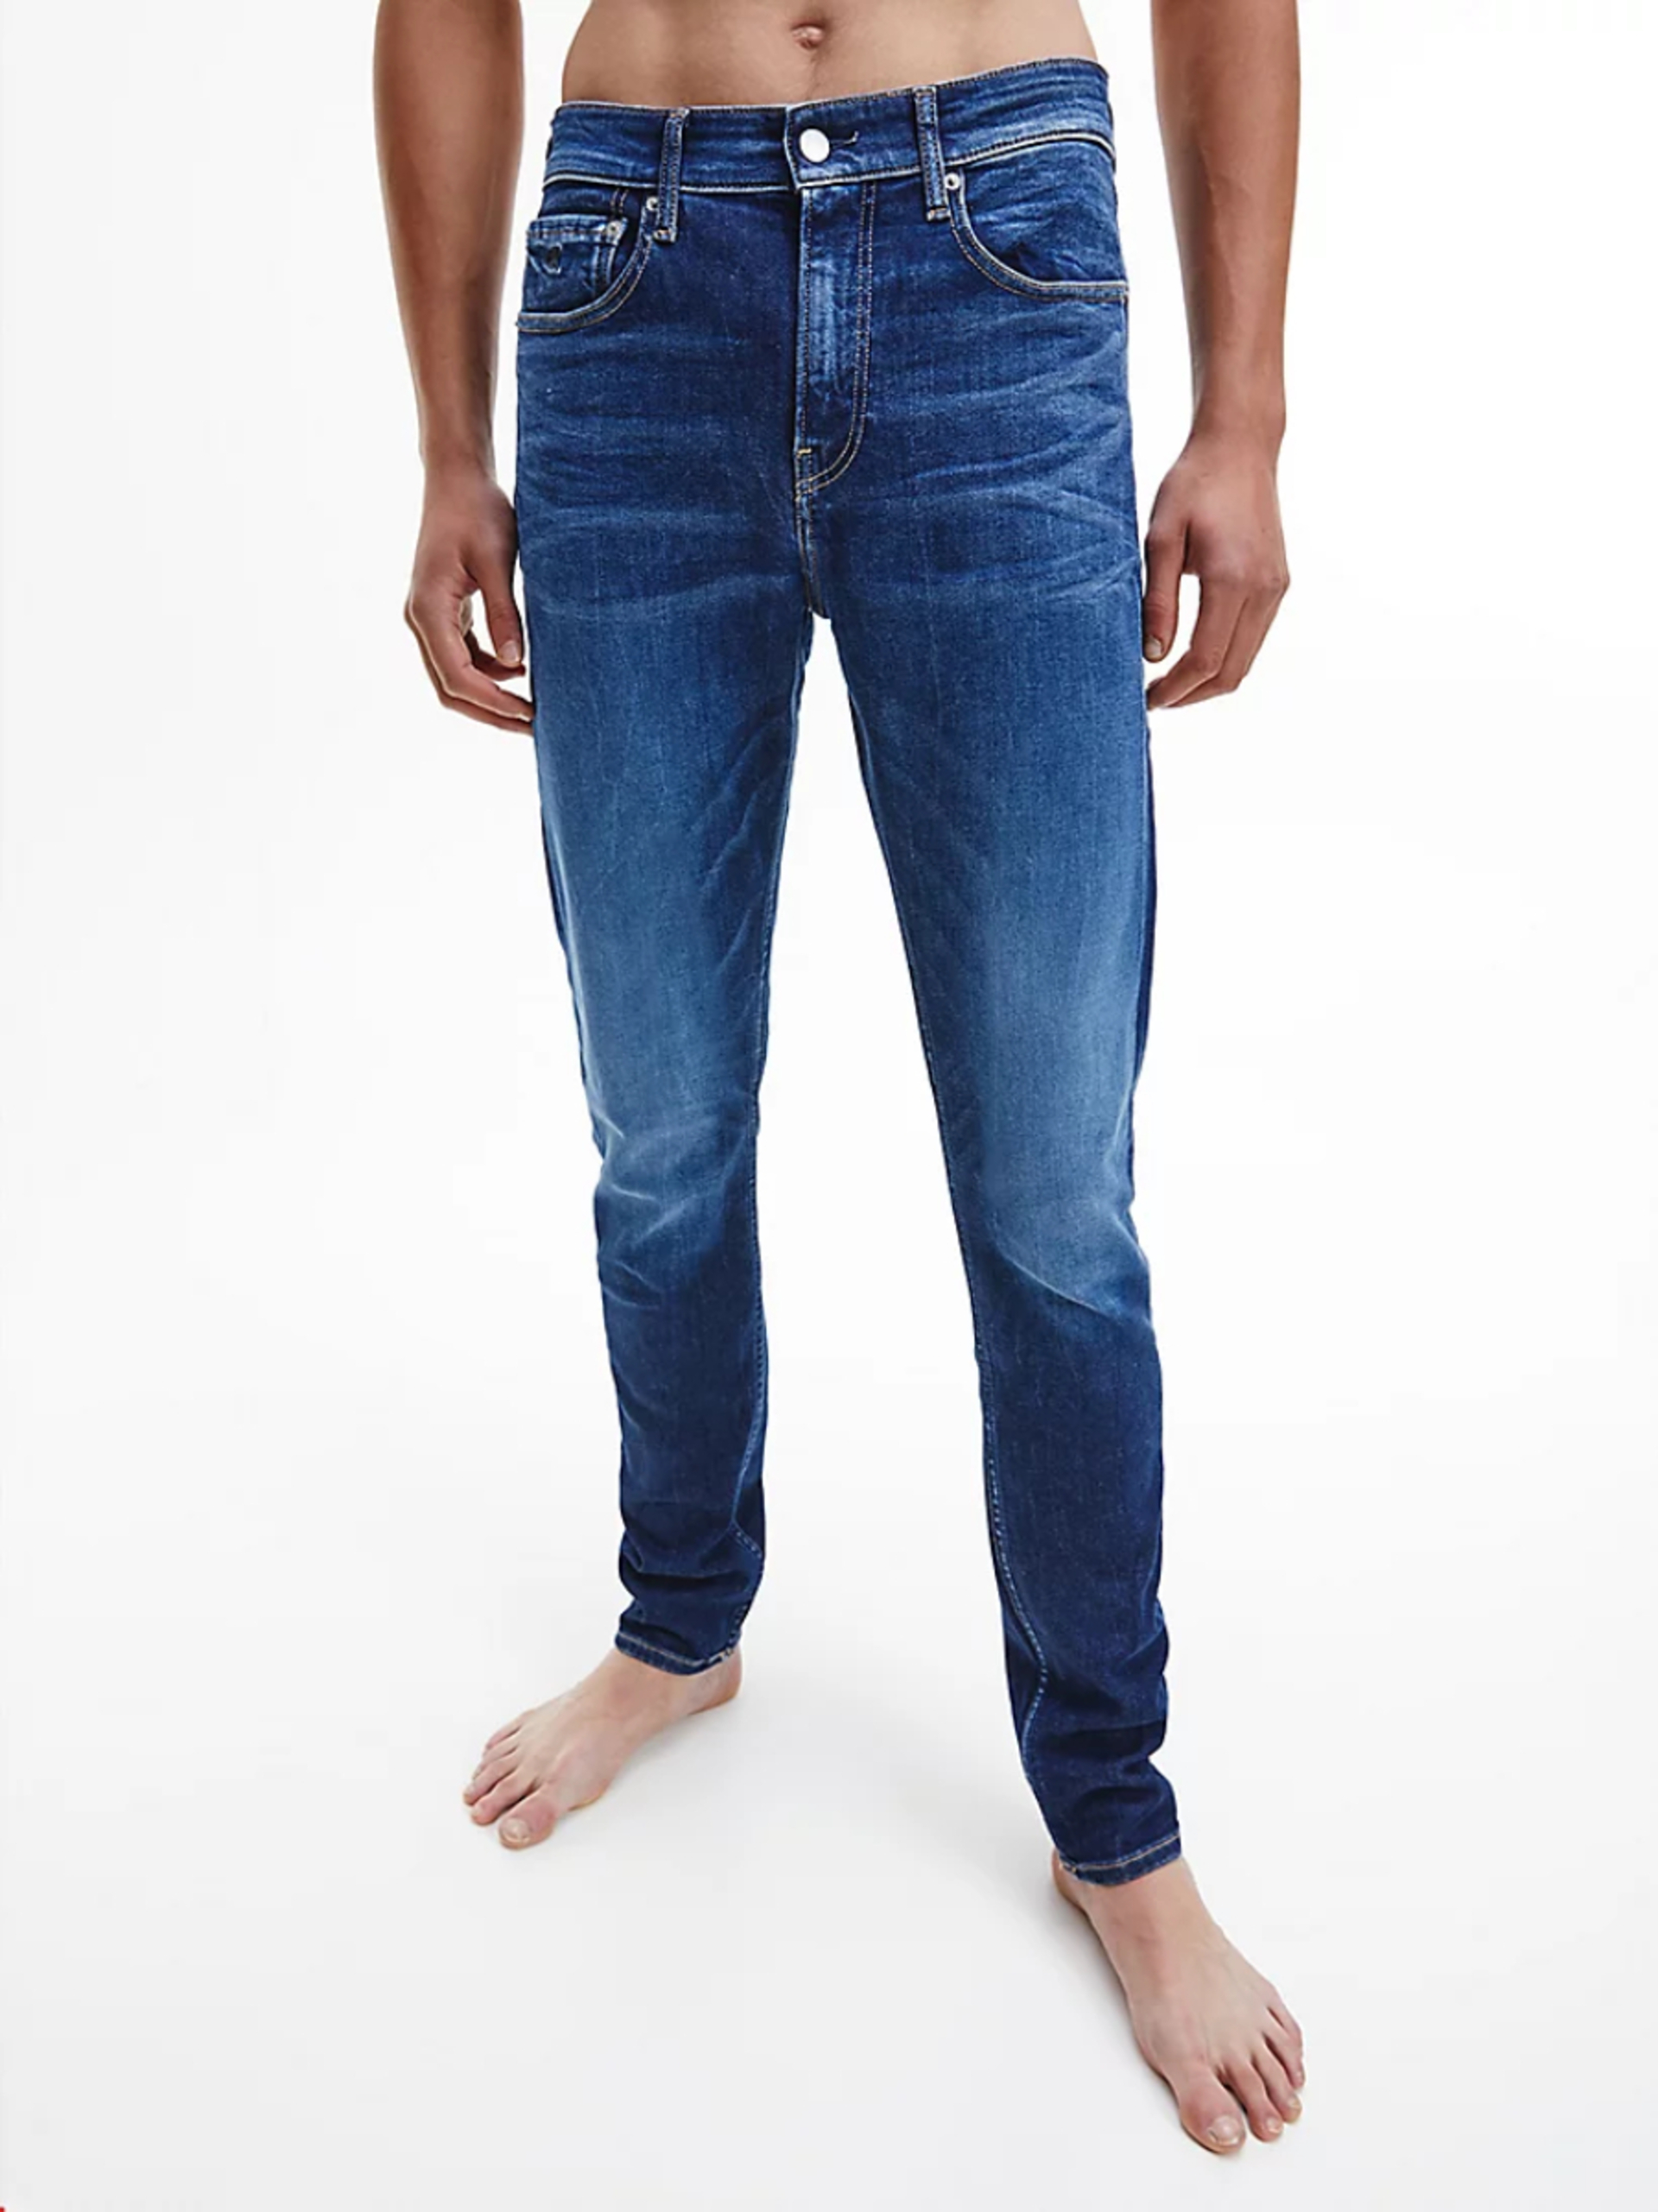 Calvin Klein pánské modré džíny Taper - 33/32 (1BJ)